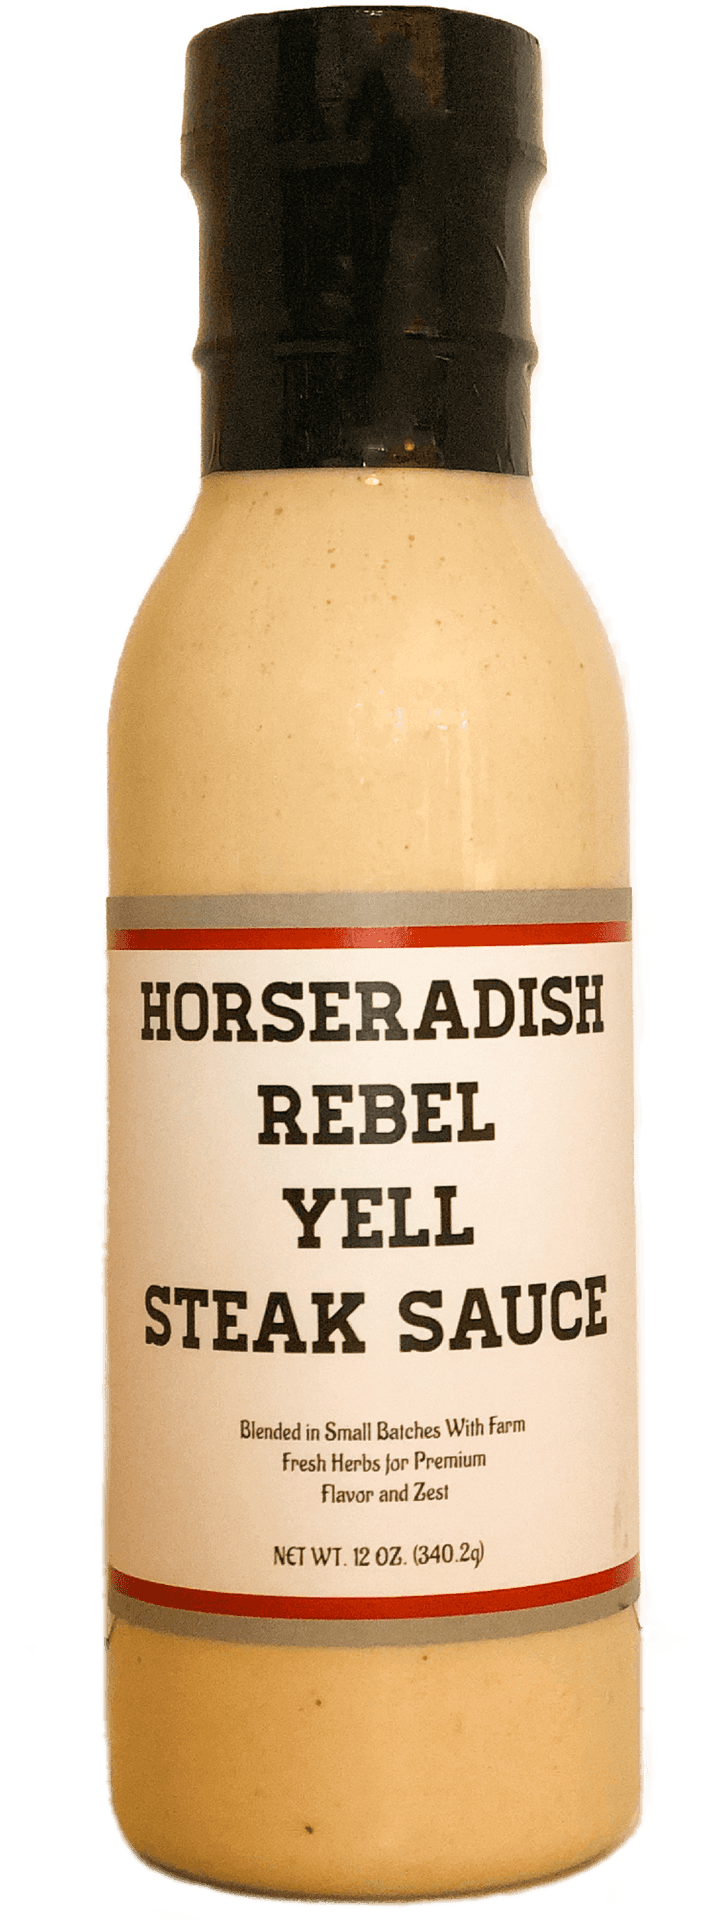 Horseradish Rebel Yell Steak Sauce Bottle PNG image